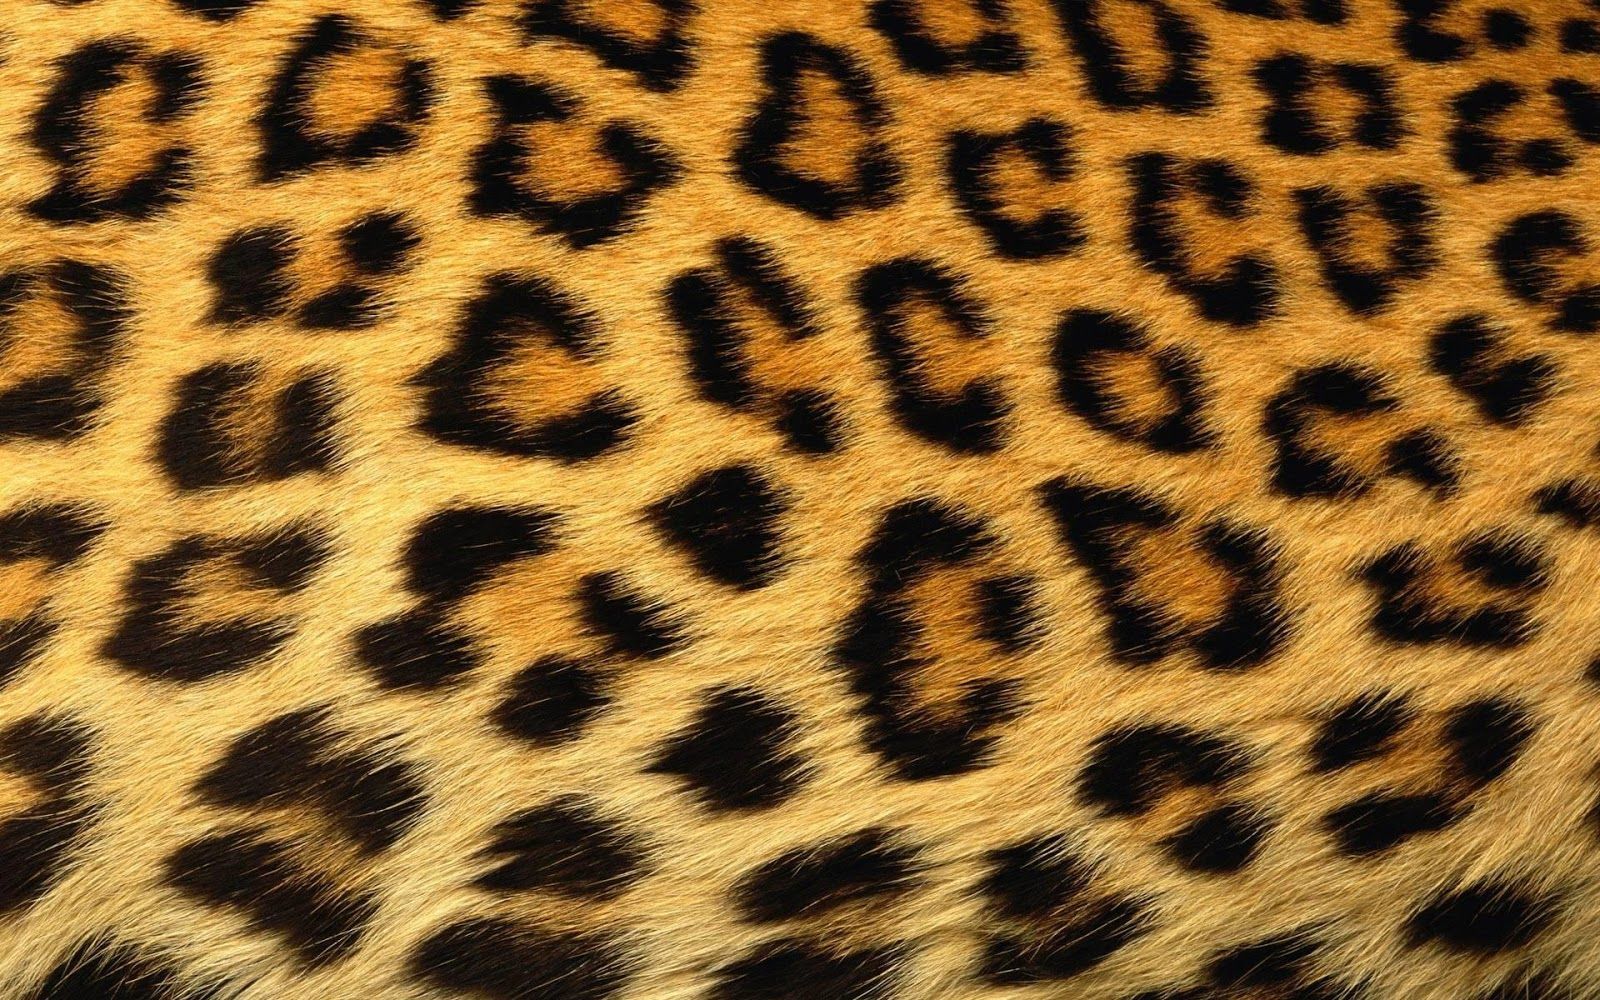 1080p HD Animal Print Wallpaper High Quality Desktop, iphone and android a. Animal print wallpaper, Leopard print background, Leopard print wallpaper